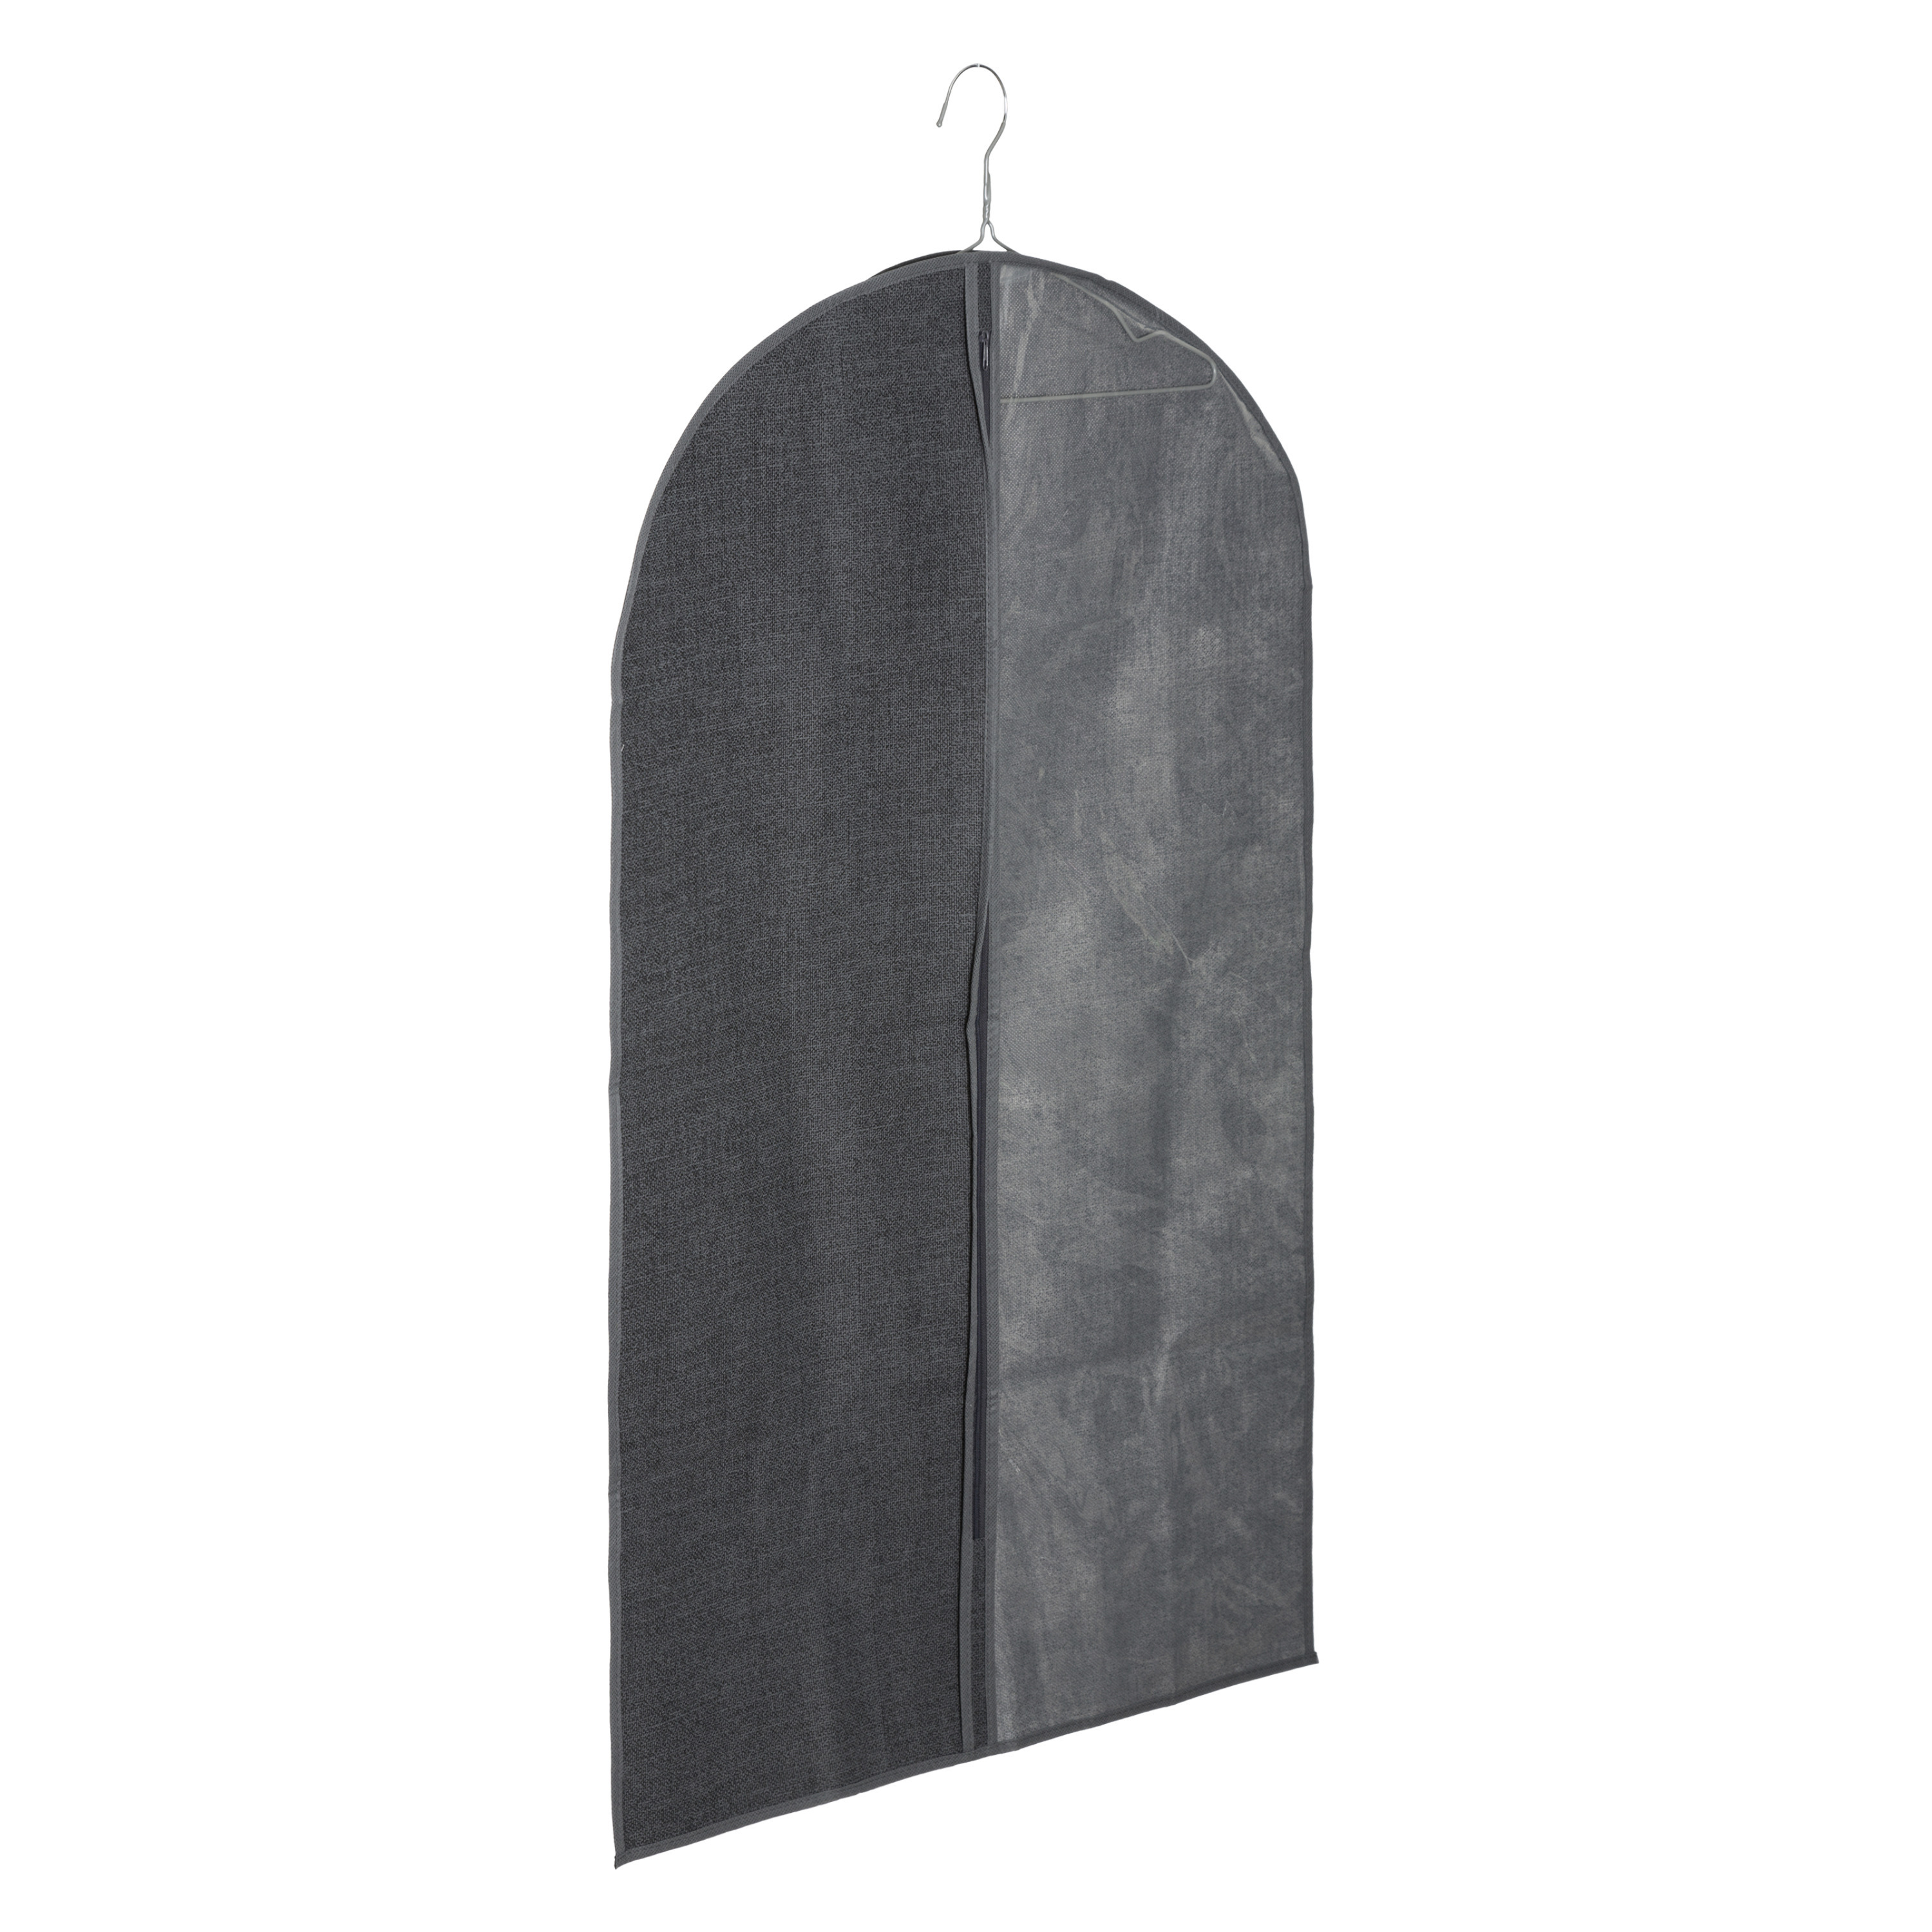 Kleding-beschermhoes linnen grijs 100 cm inclusief kledinghangers